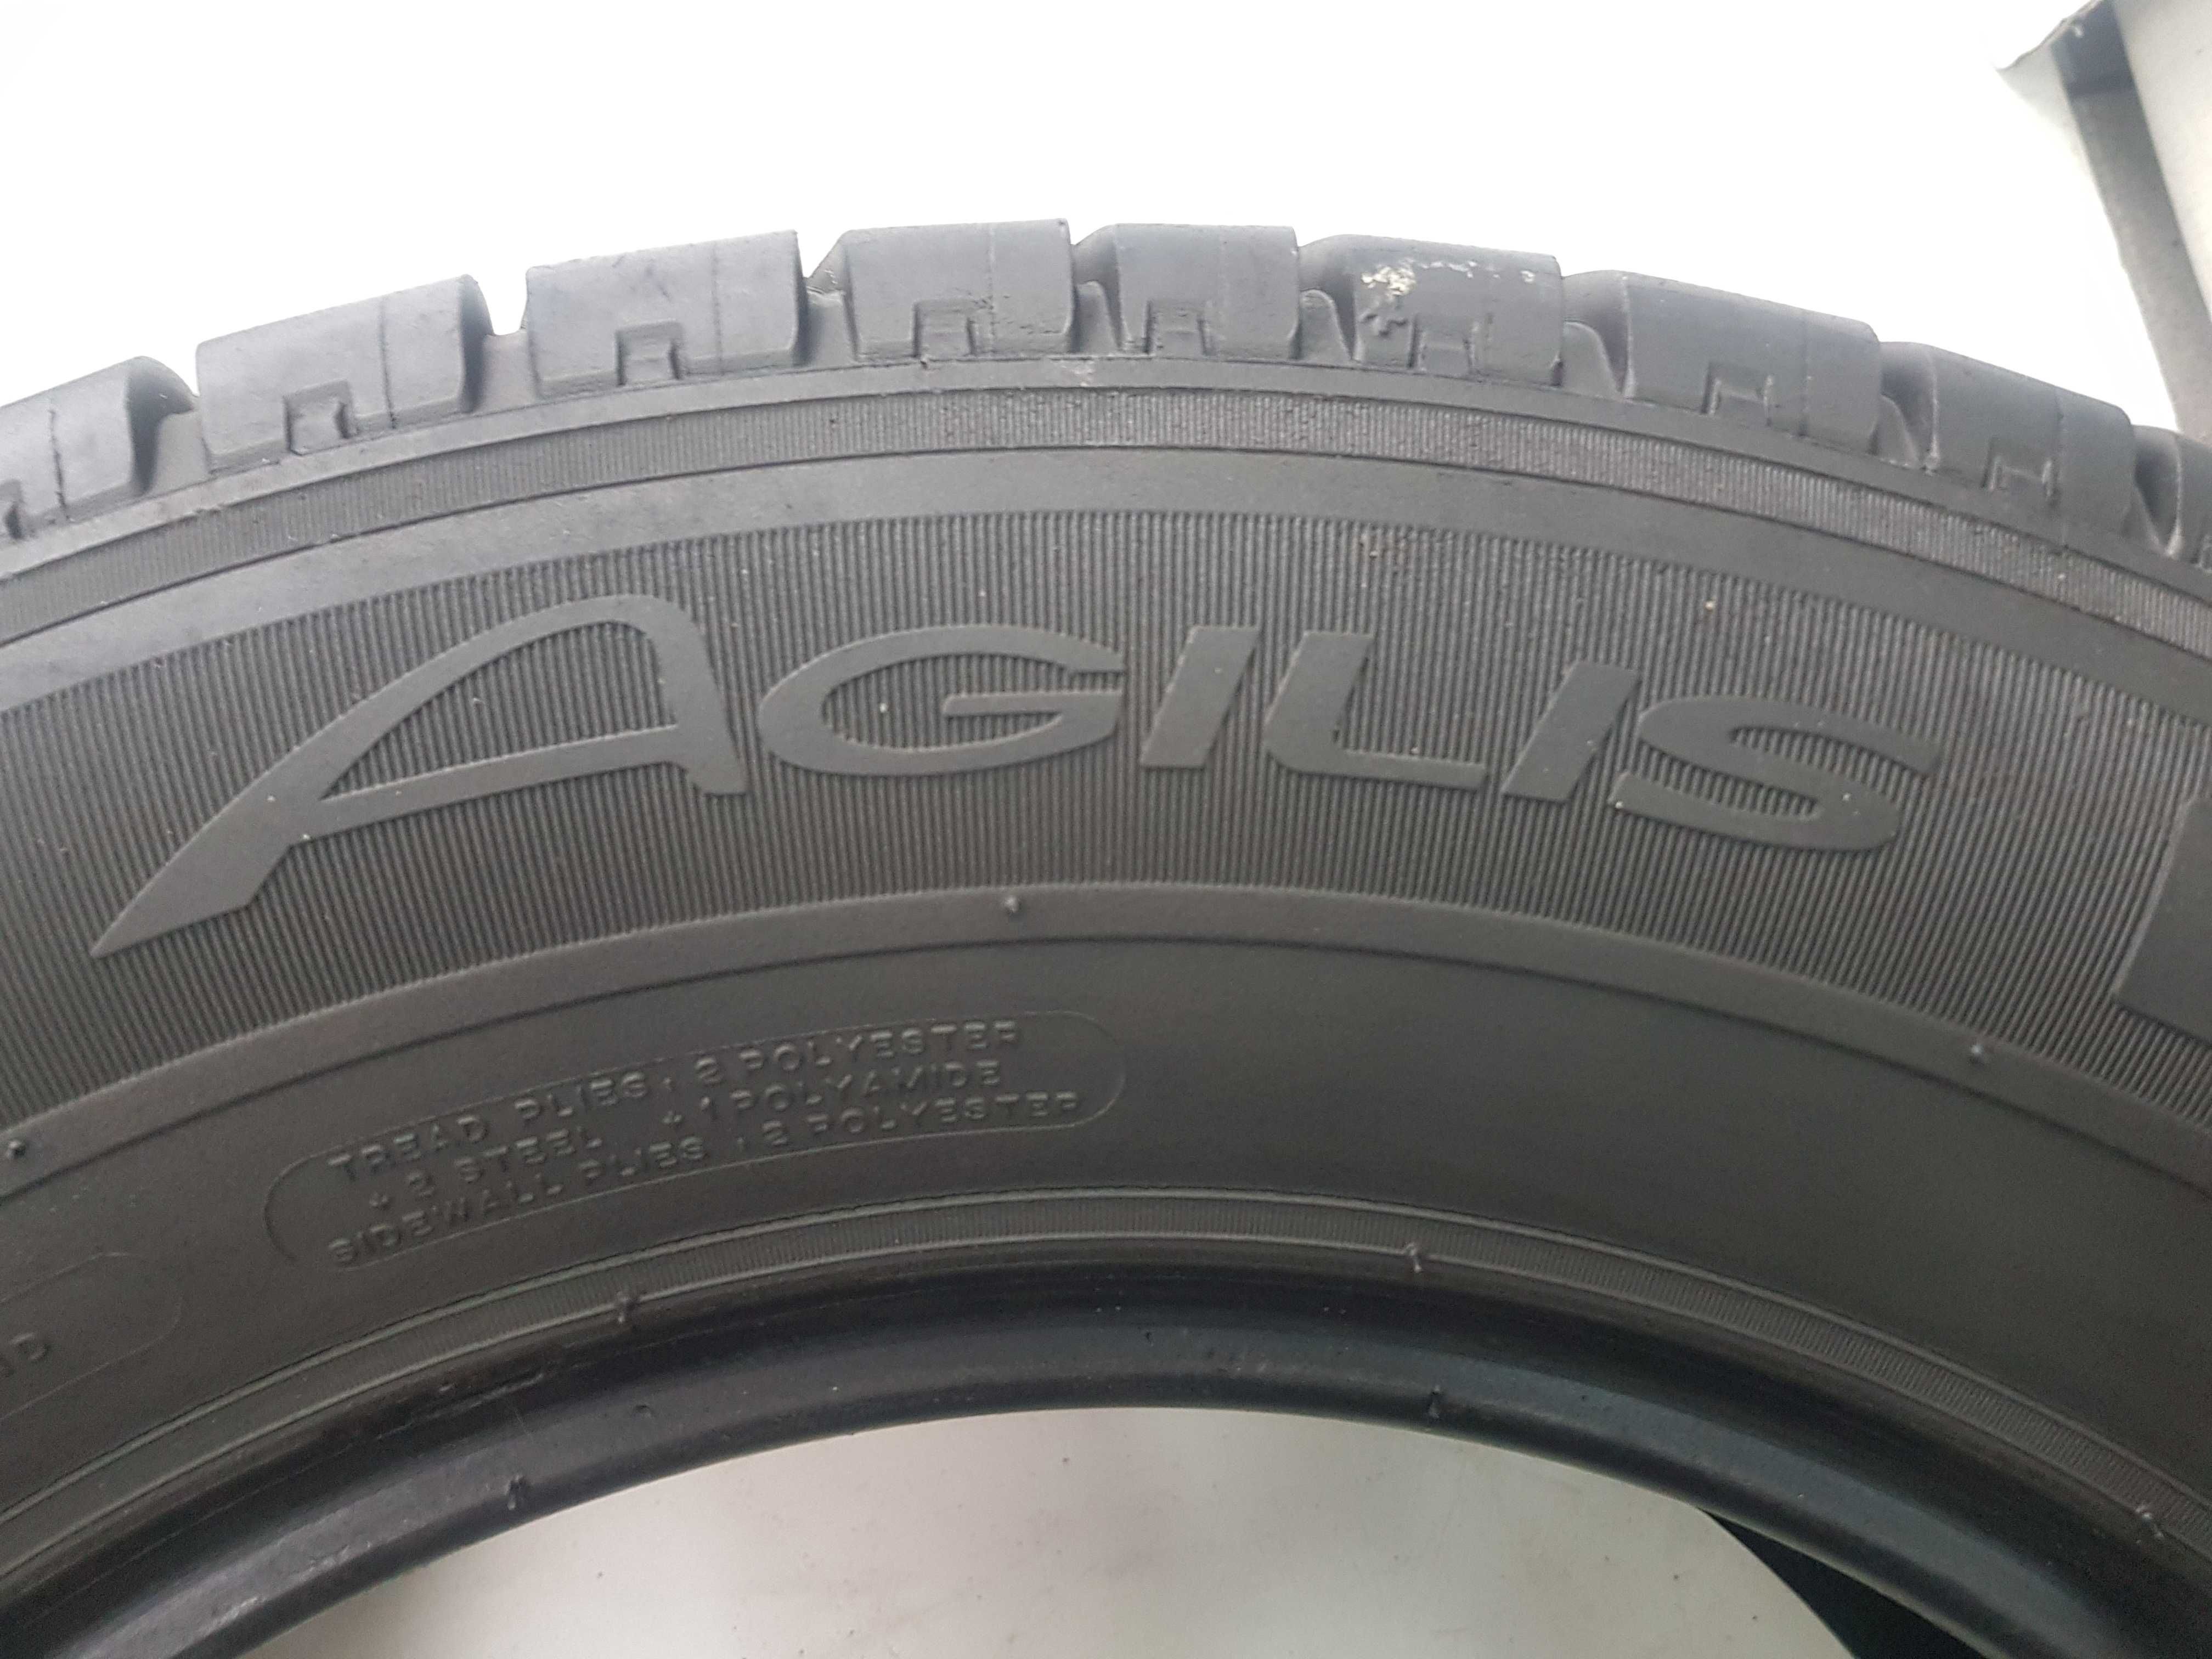 Michelin Agilis+ 235/65R16 115/113 R